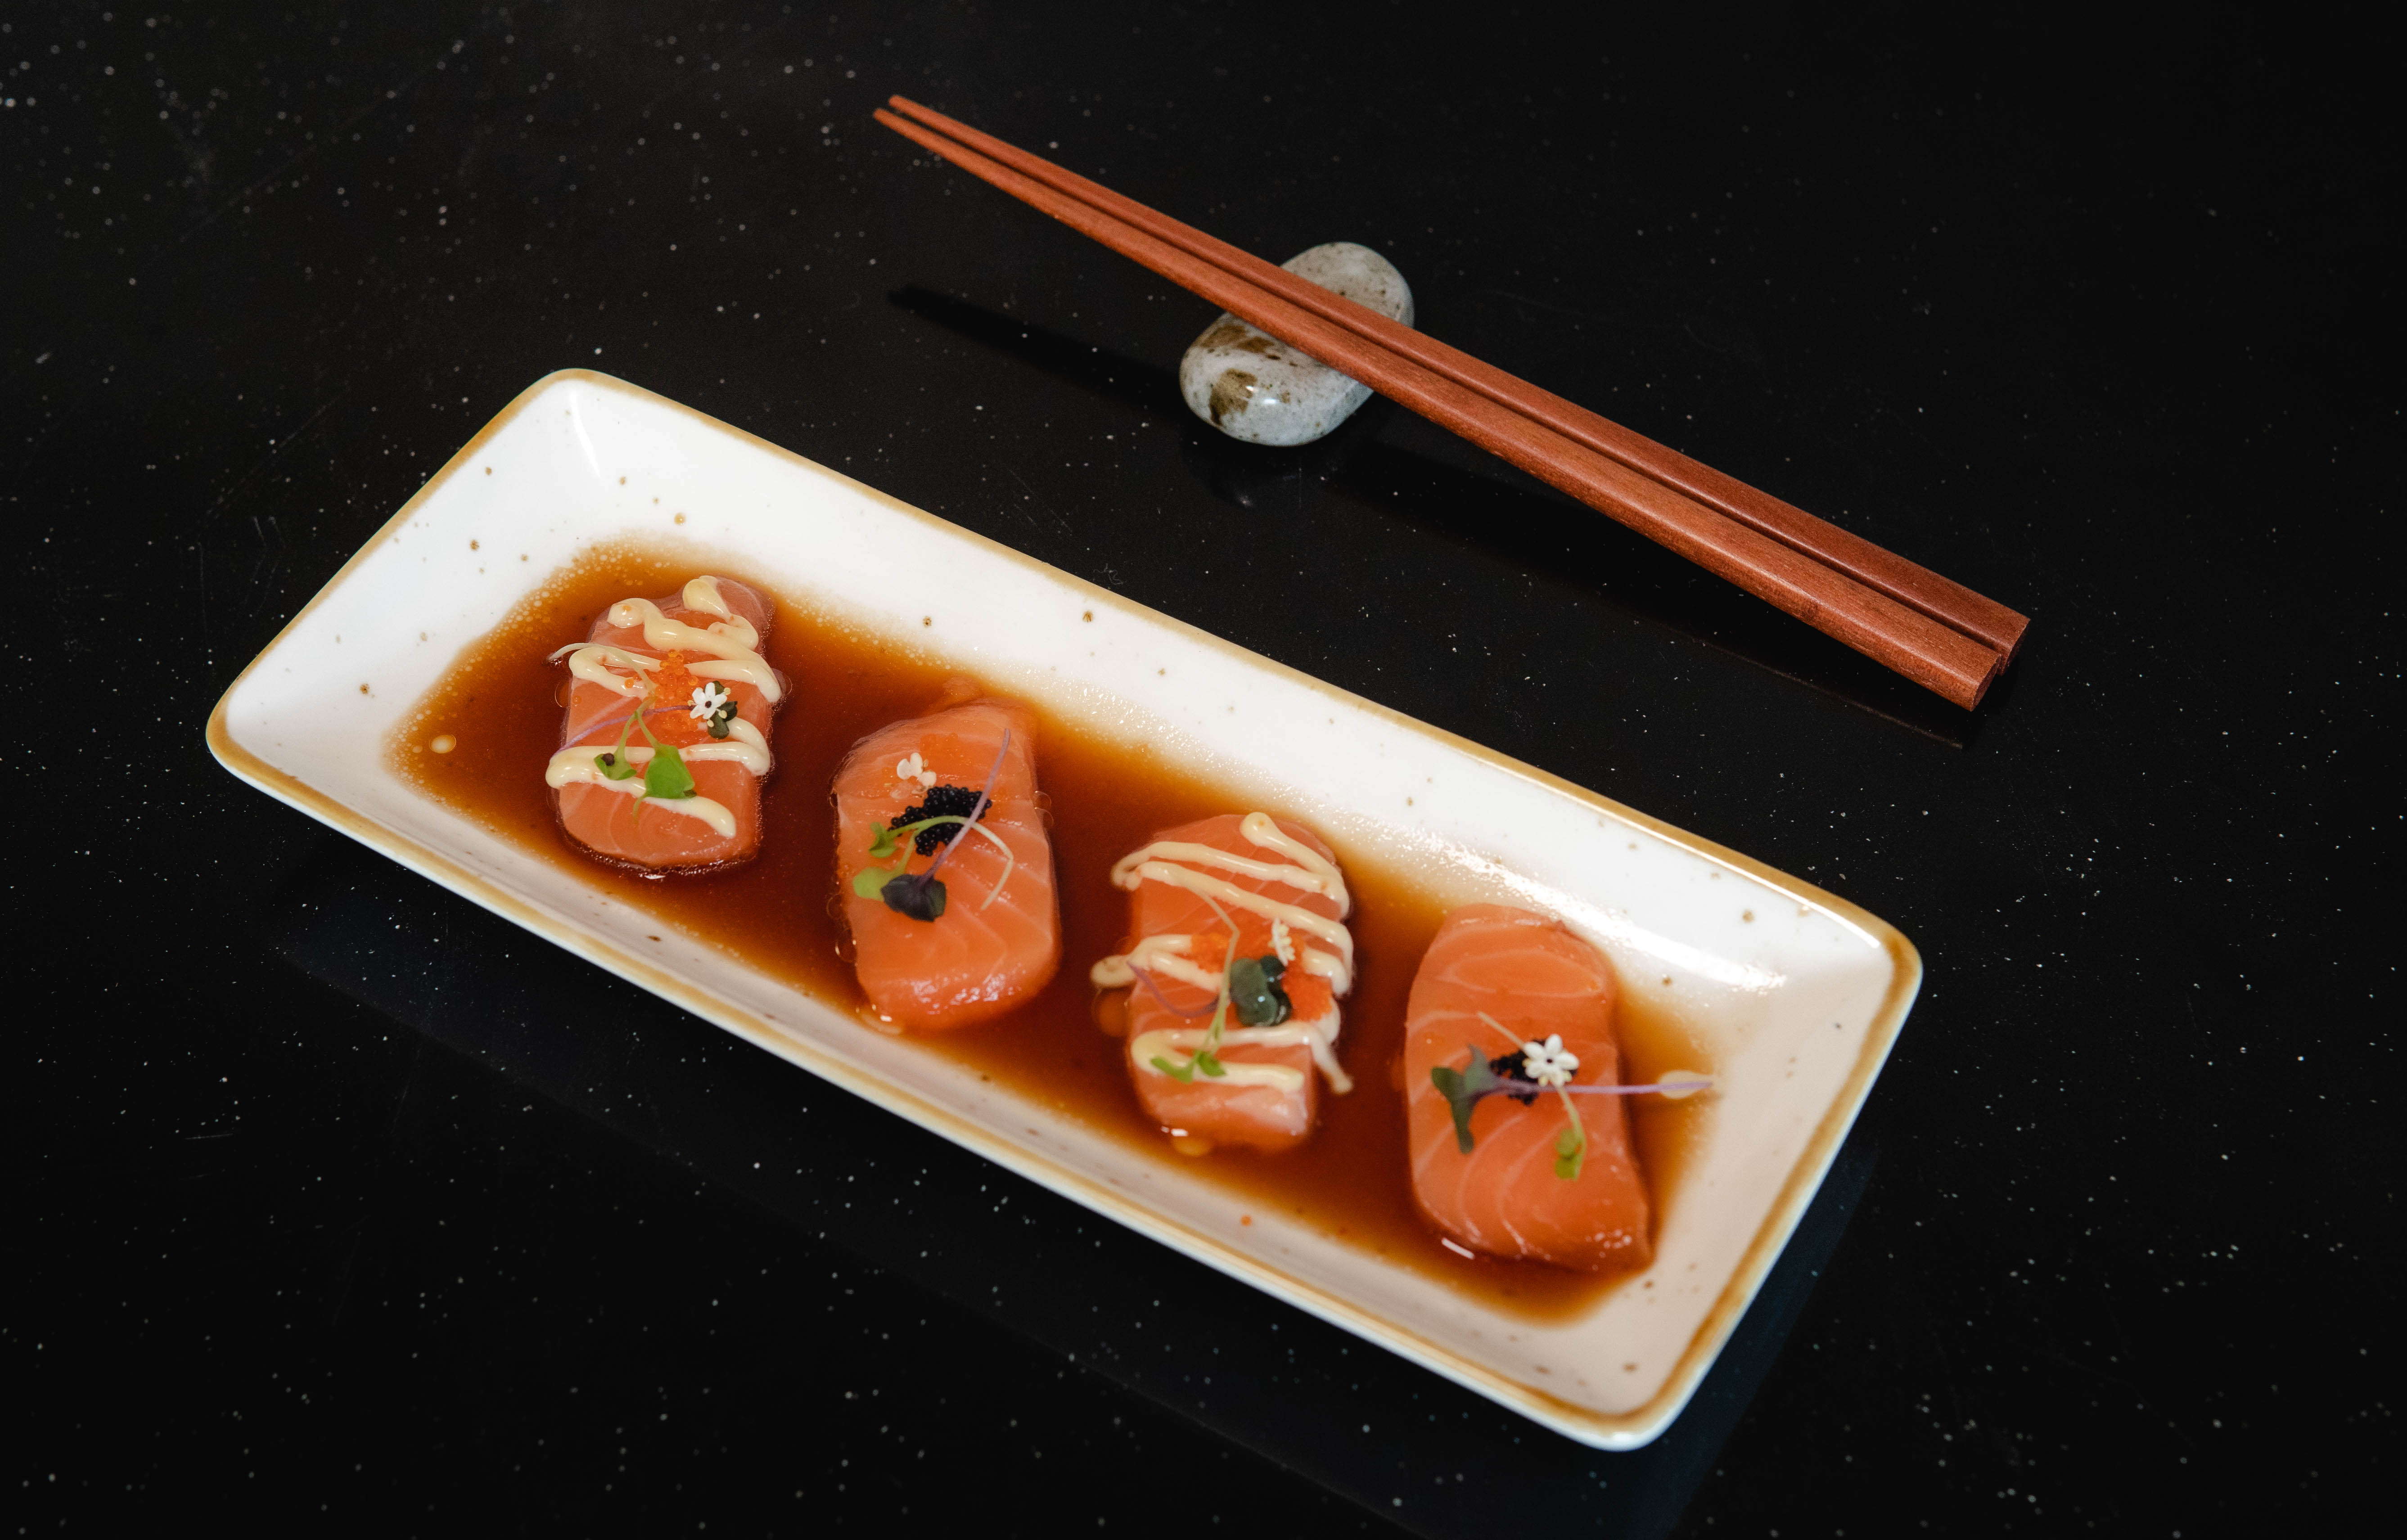 Norii Ubud: A Modern Take on Authentic Japanese Cuisine